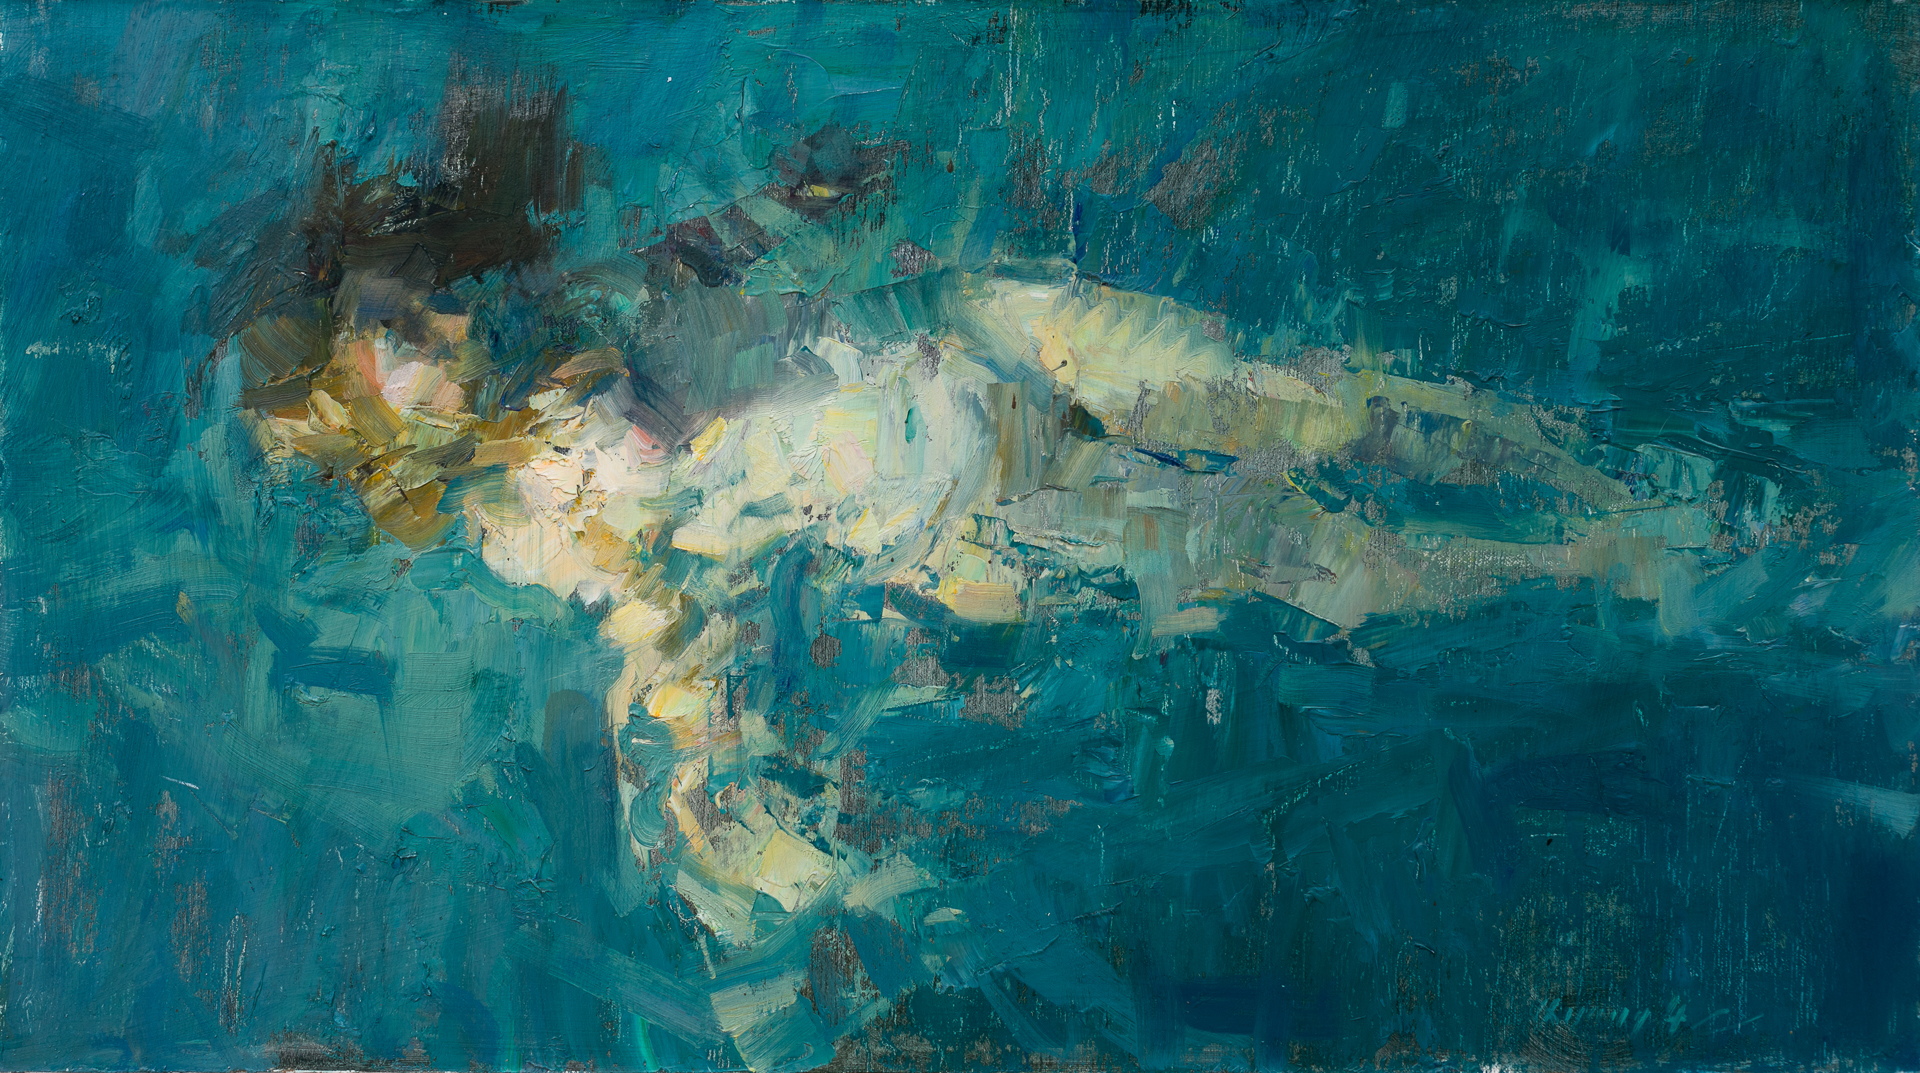 Mermaid by Quang Ho